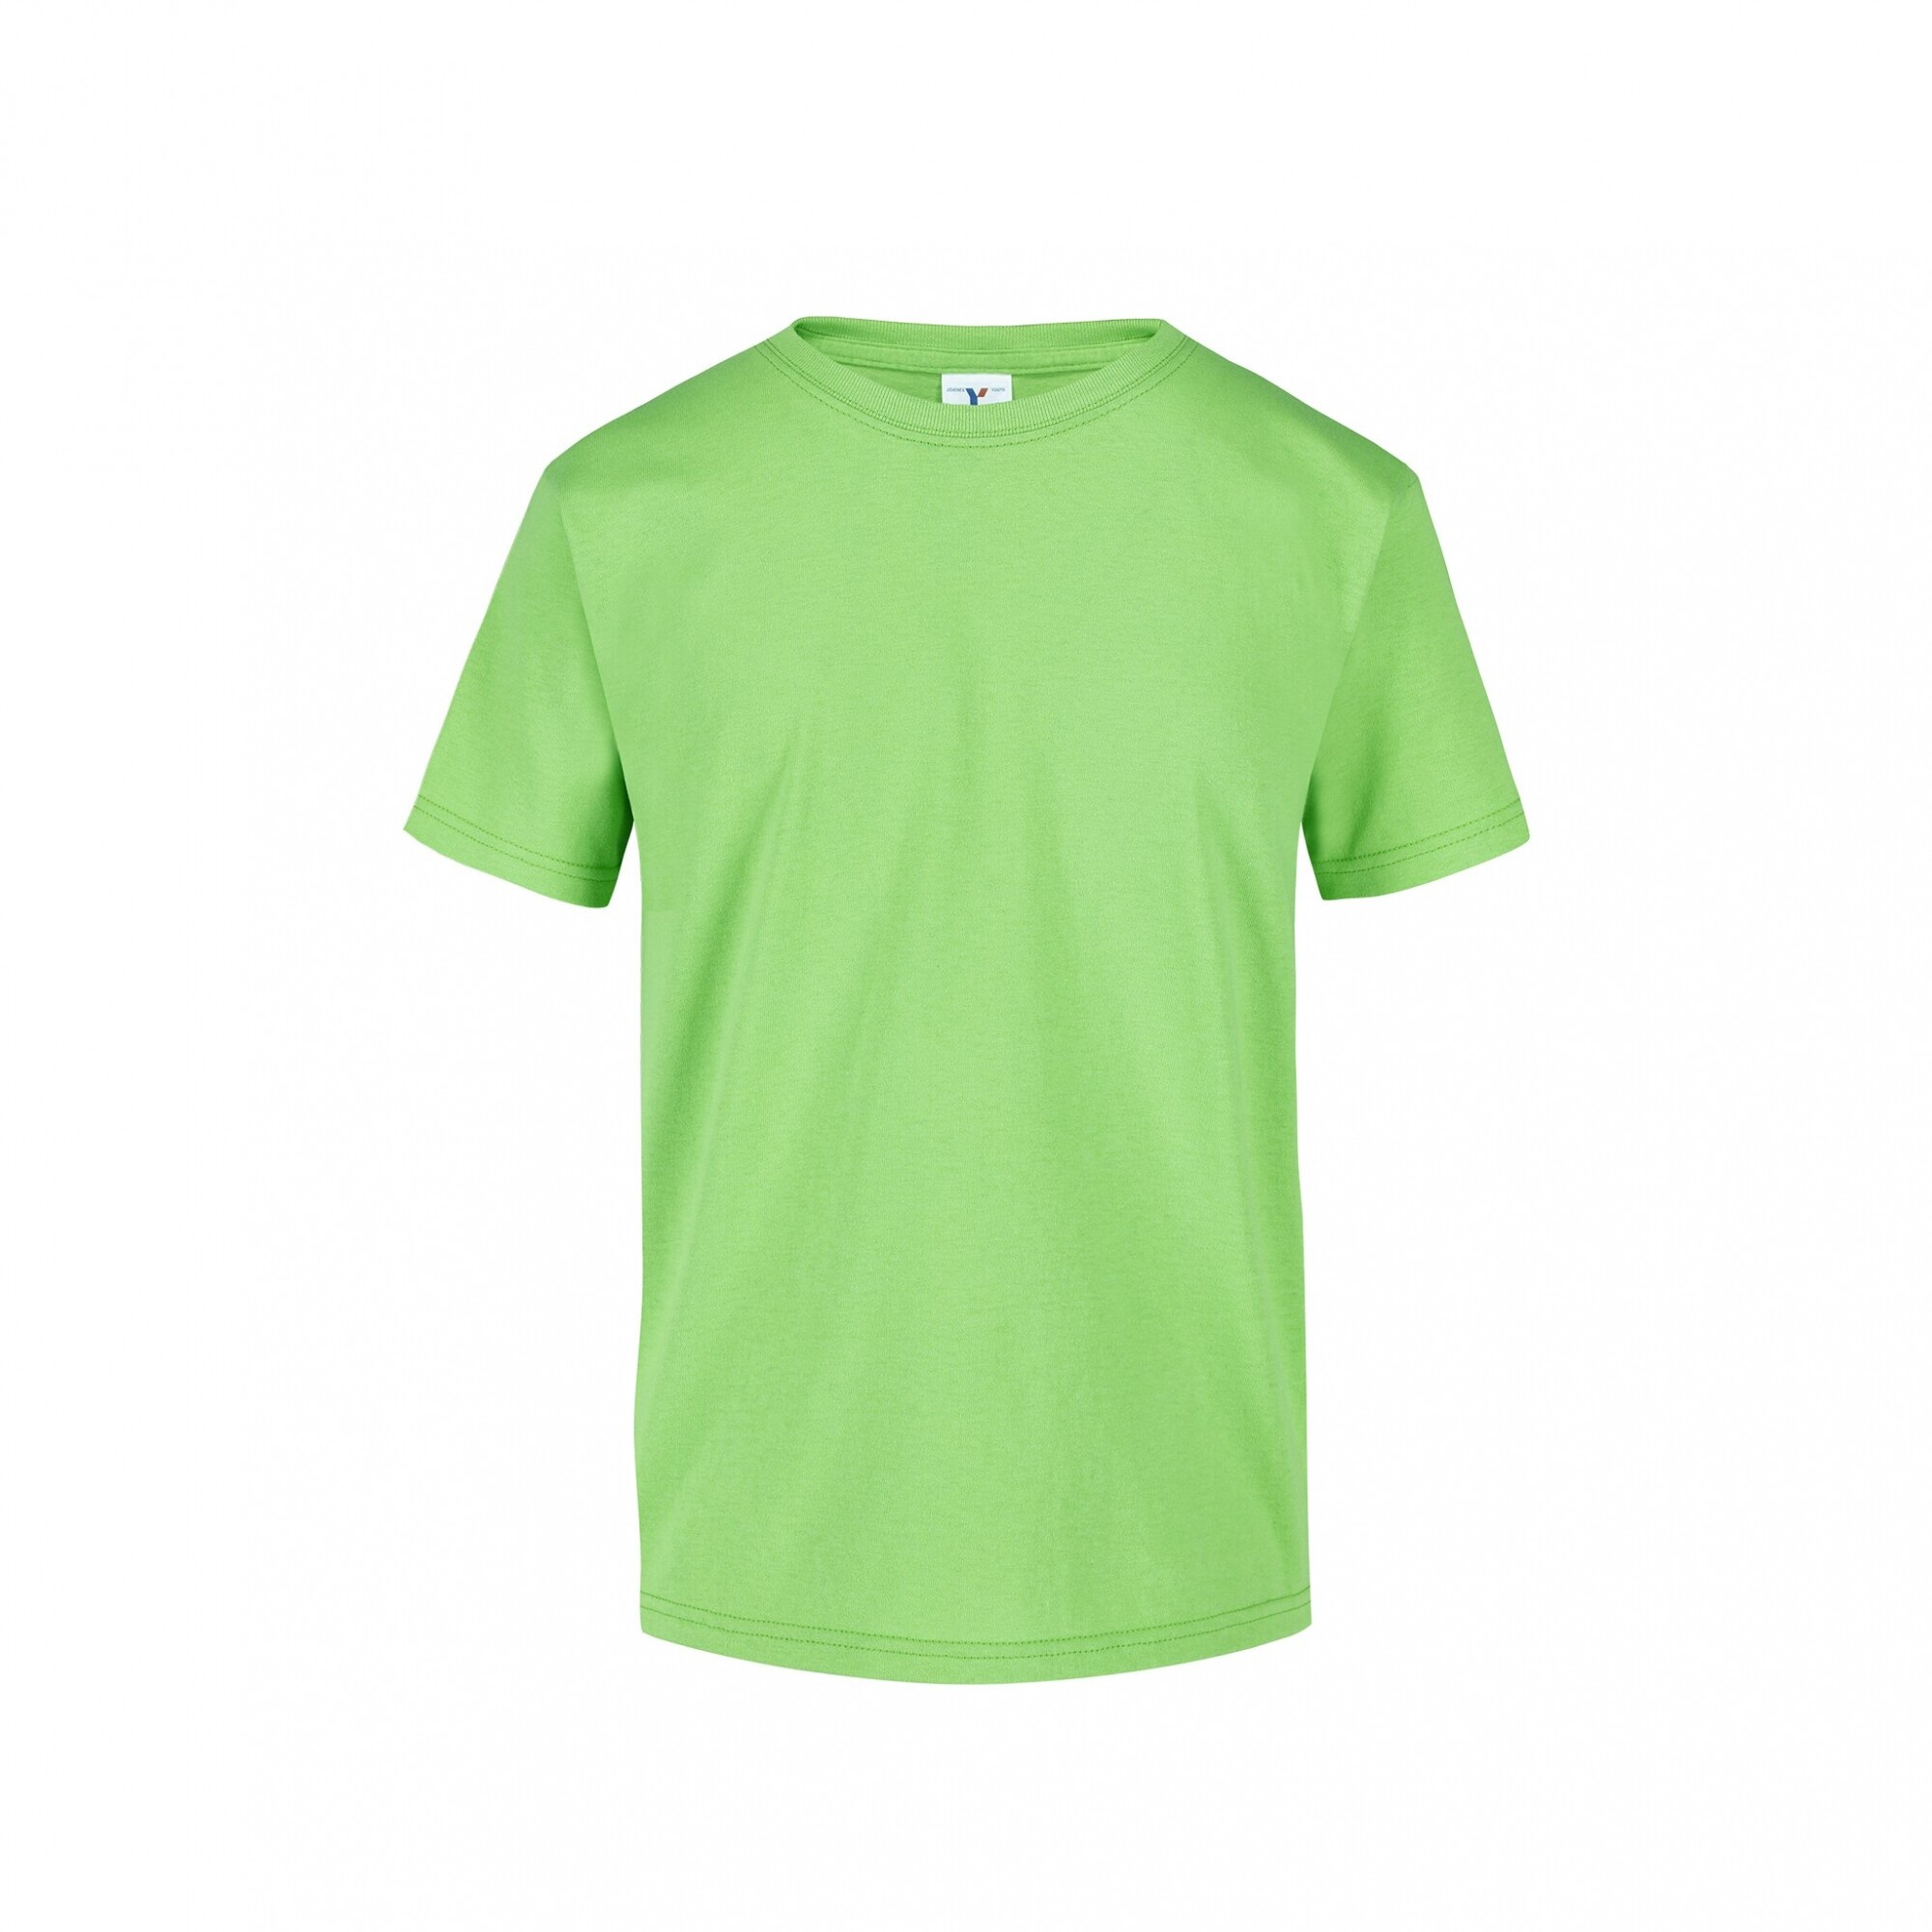 Camiseta a la base niño - Verde lima — Indiewears